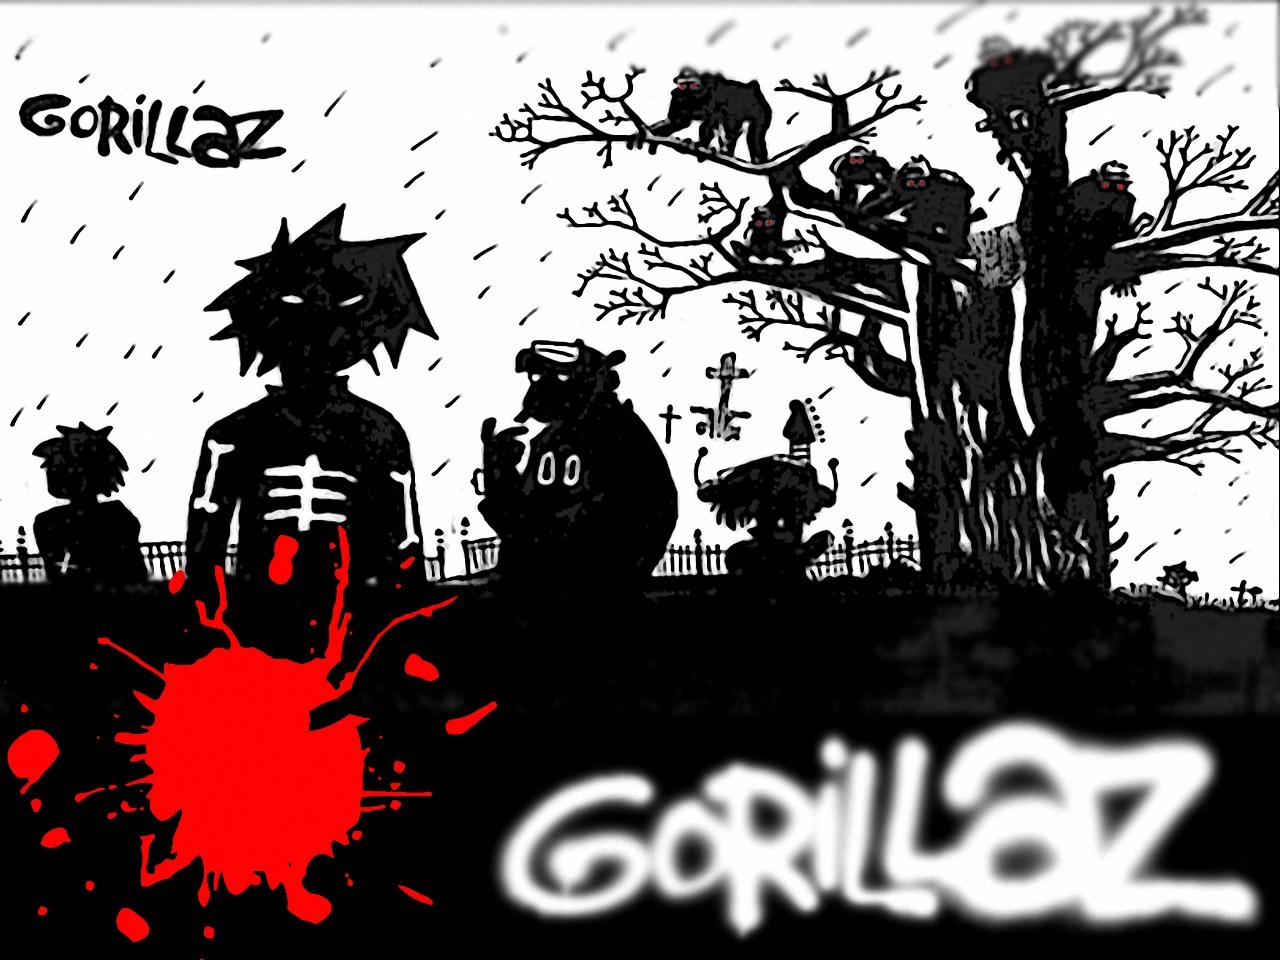 http://nelena-rockgod.blogspot.com/2014/02/gorillaz-wallpapers.html